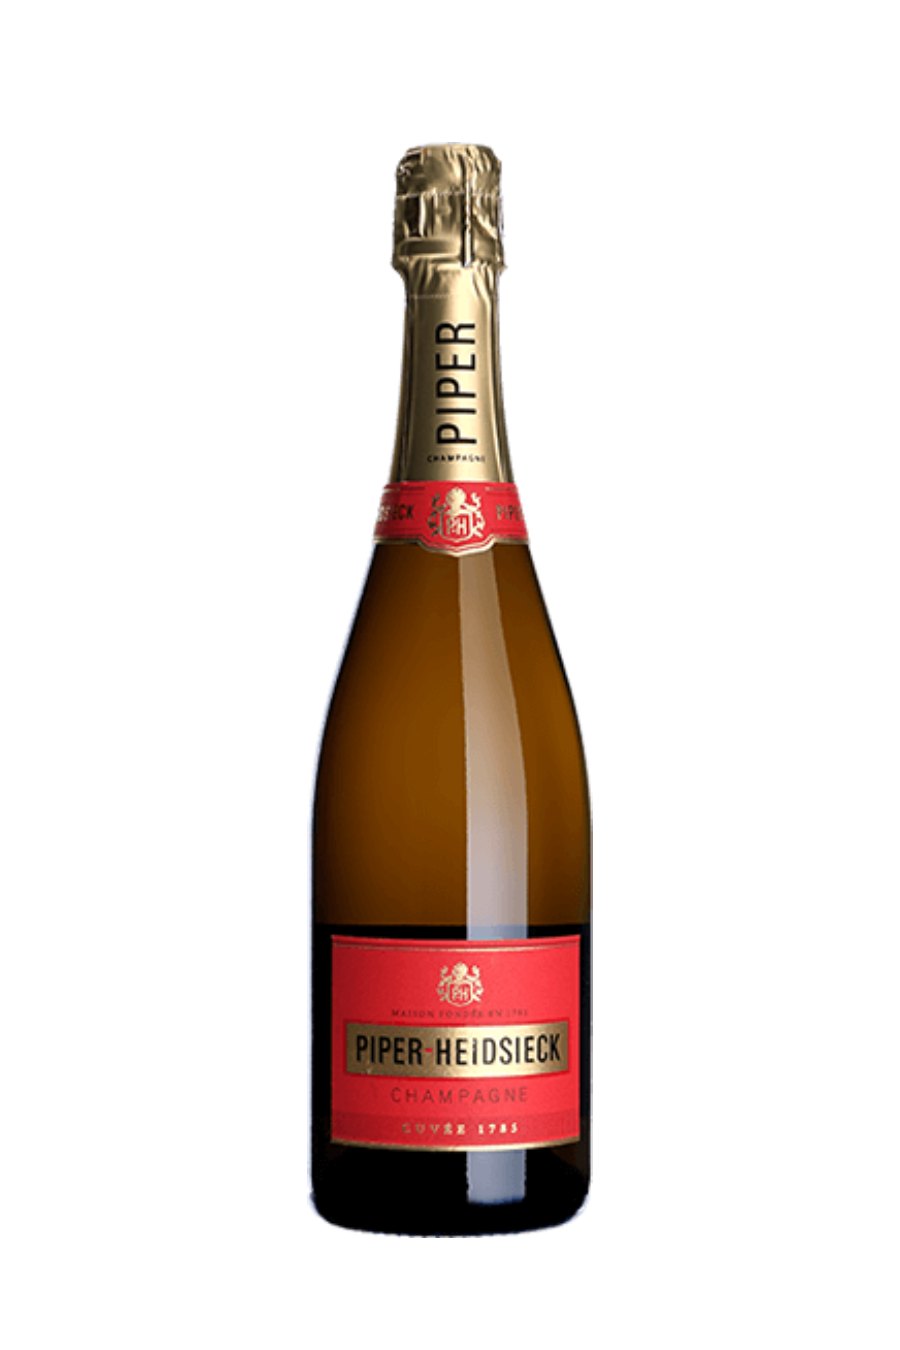 (750 1785 ml) Brut Champagne Cuvee Piper-Heidsieck